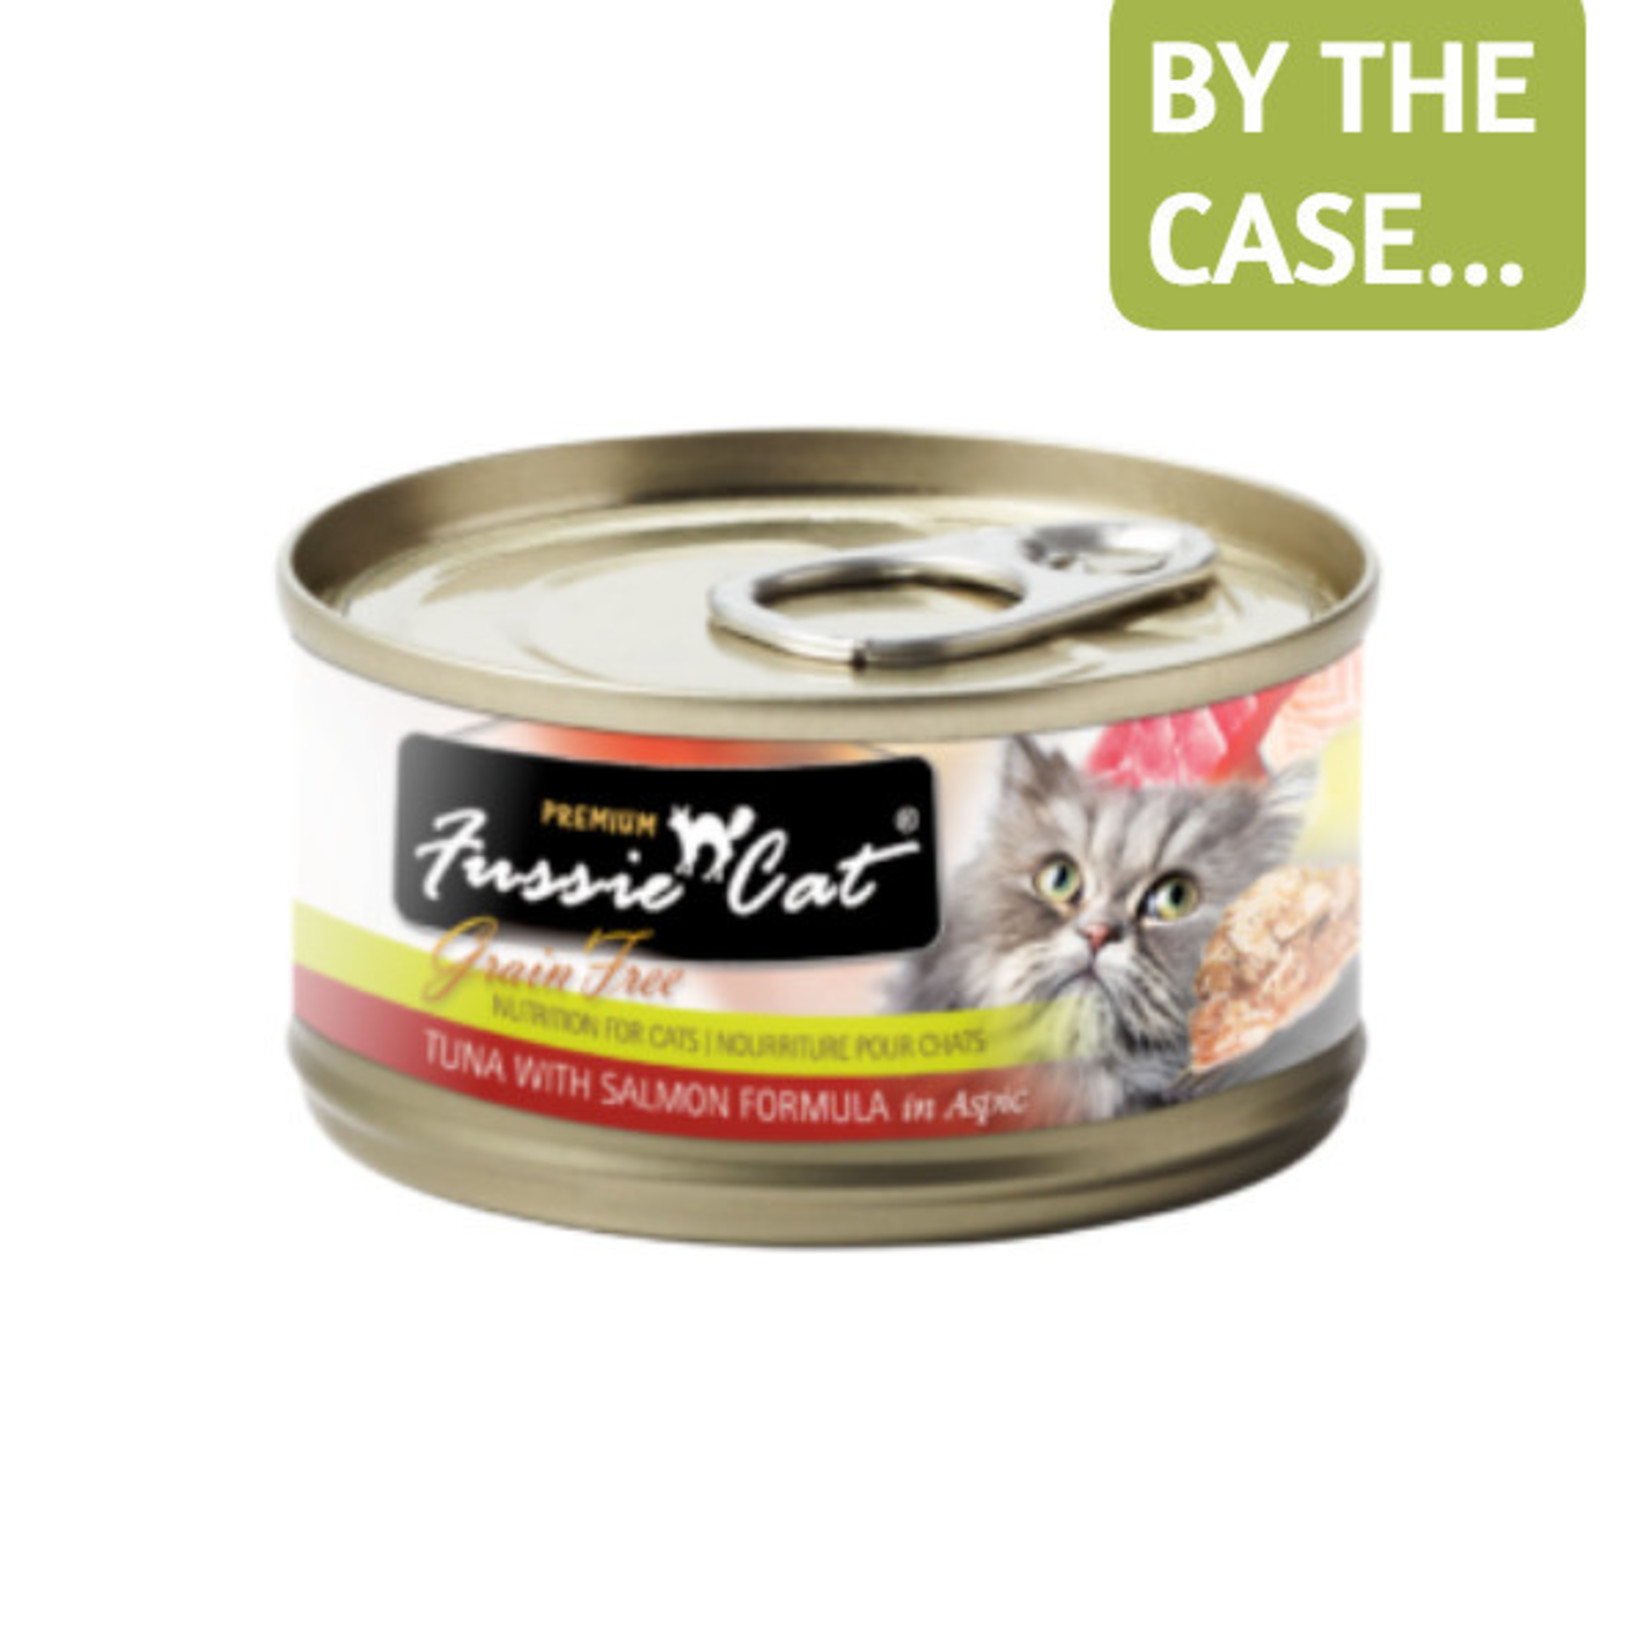 Fussie Cat Fussie Cat Wet Cat Food Tuna with Salmon Formula in Aspic 2.8oz Can Grain Free